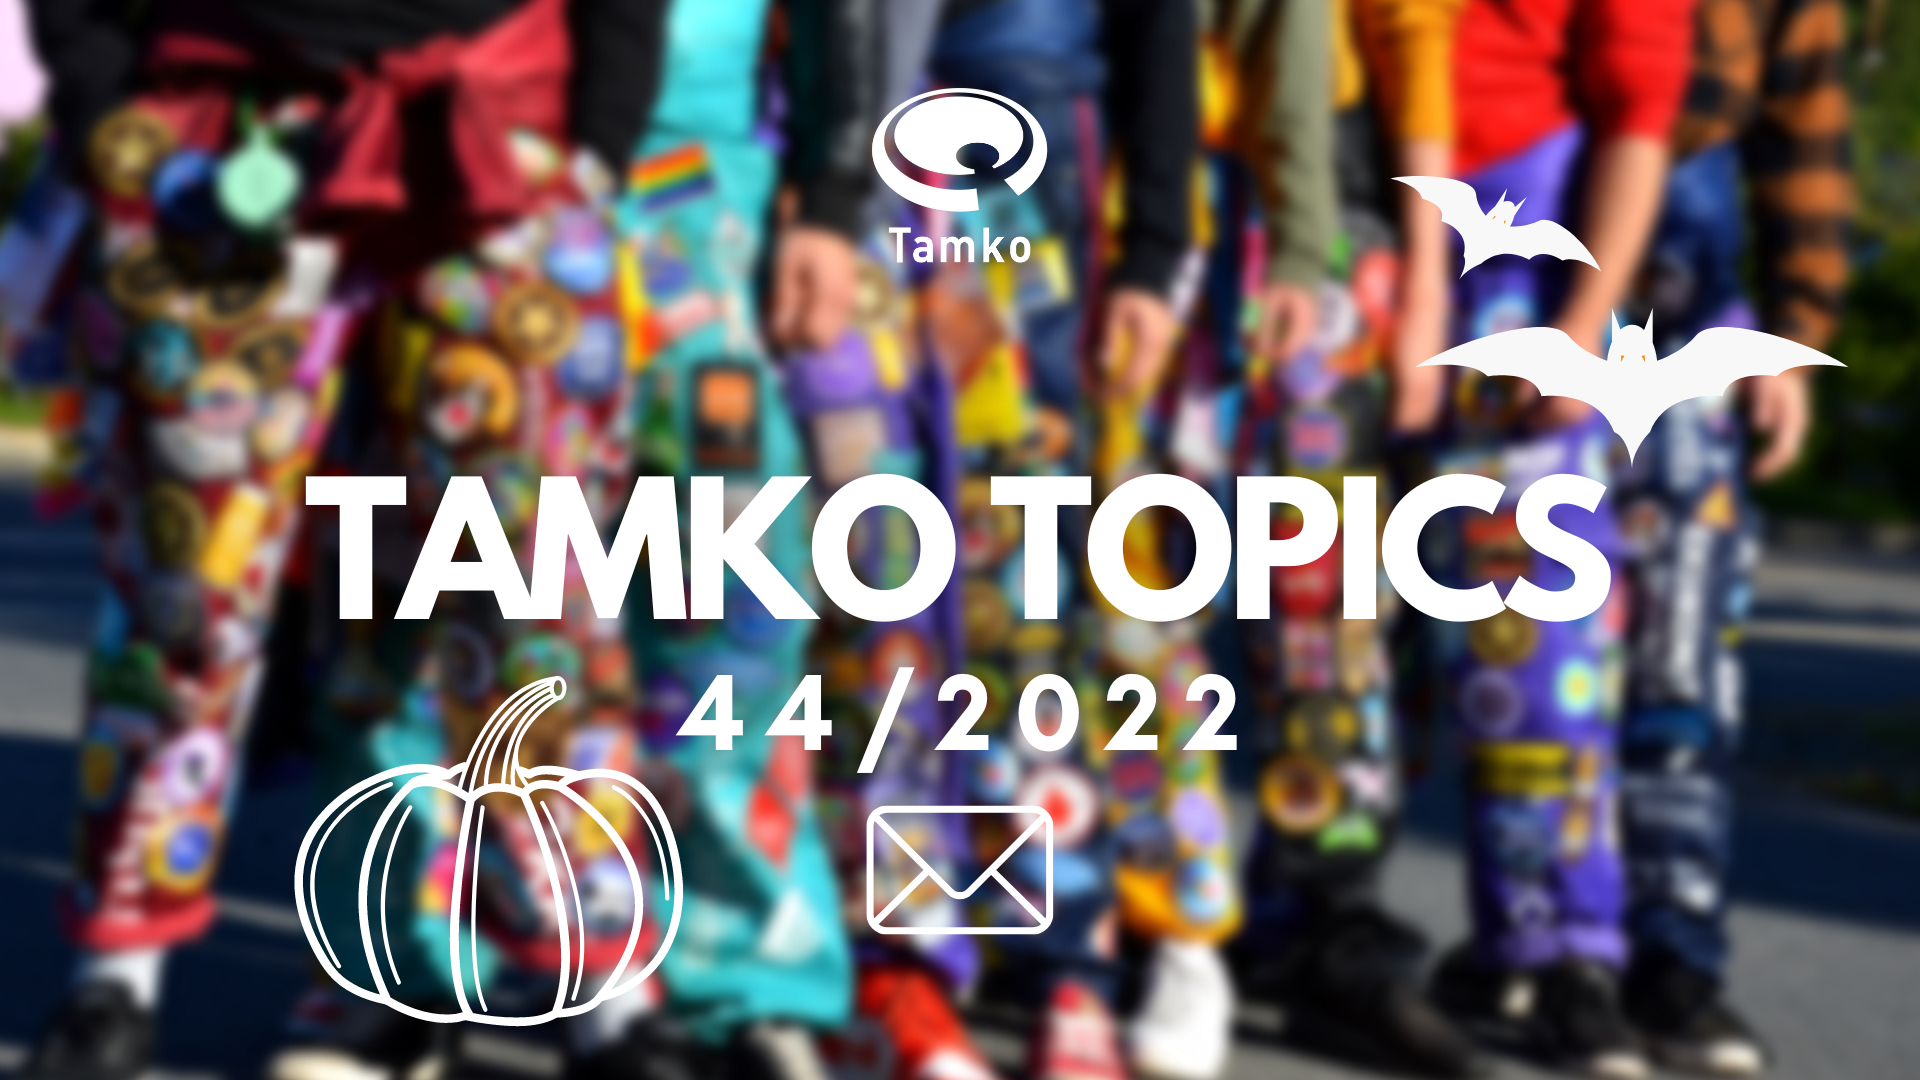 TAMKO TOPICS 44/2022